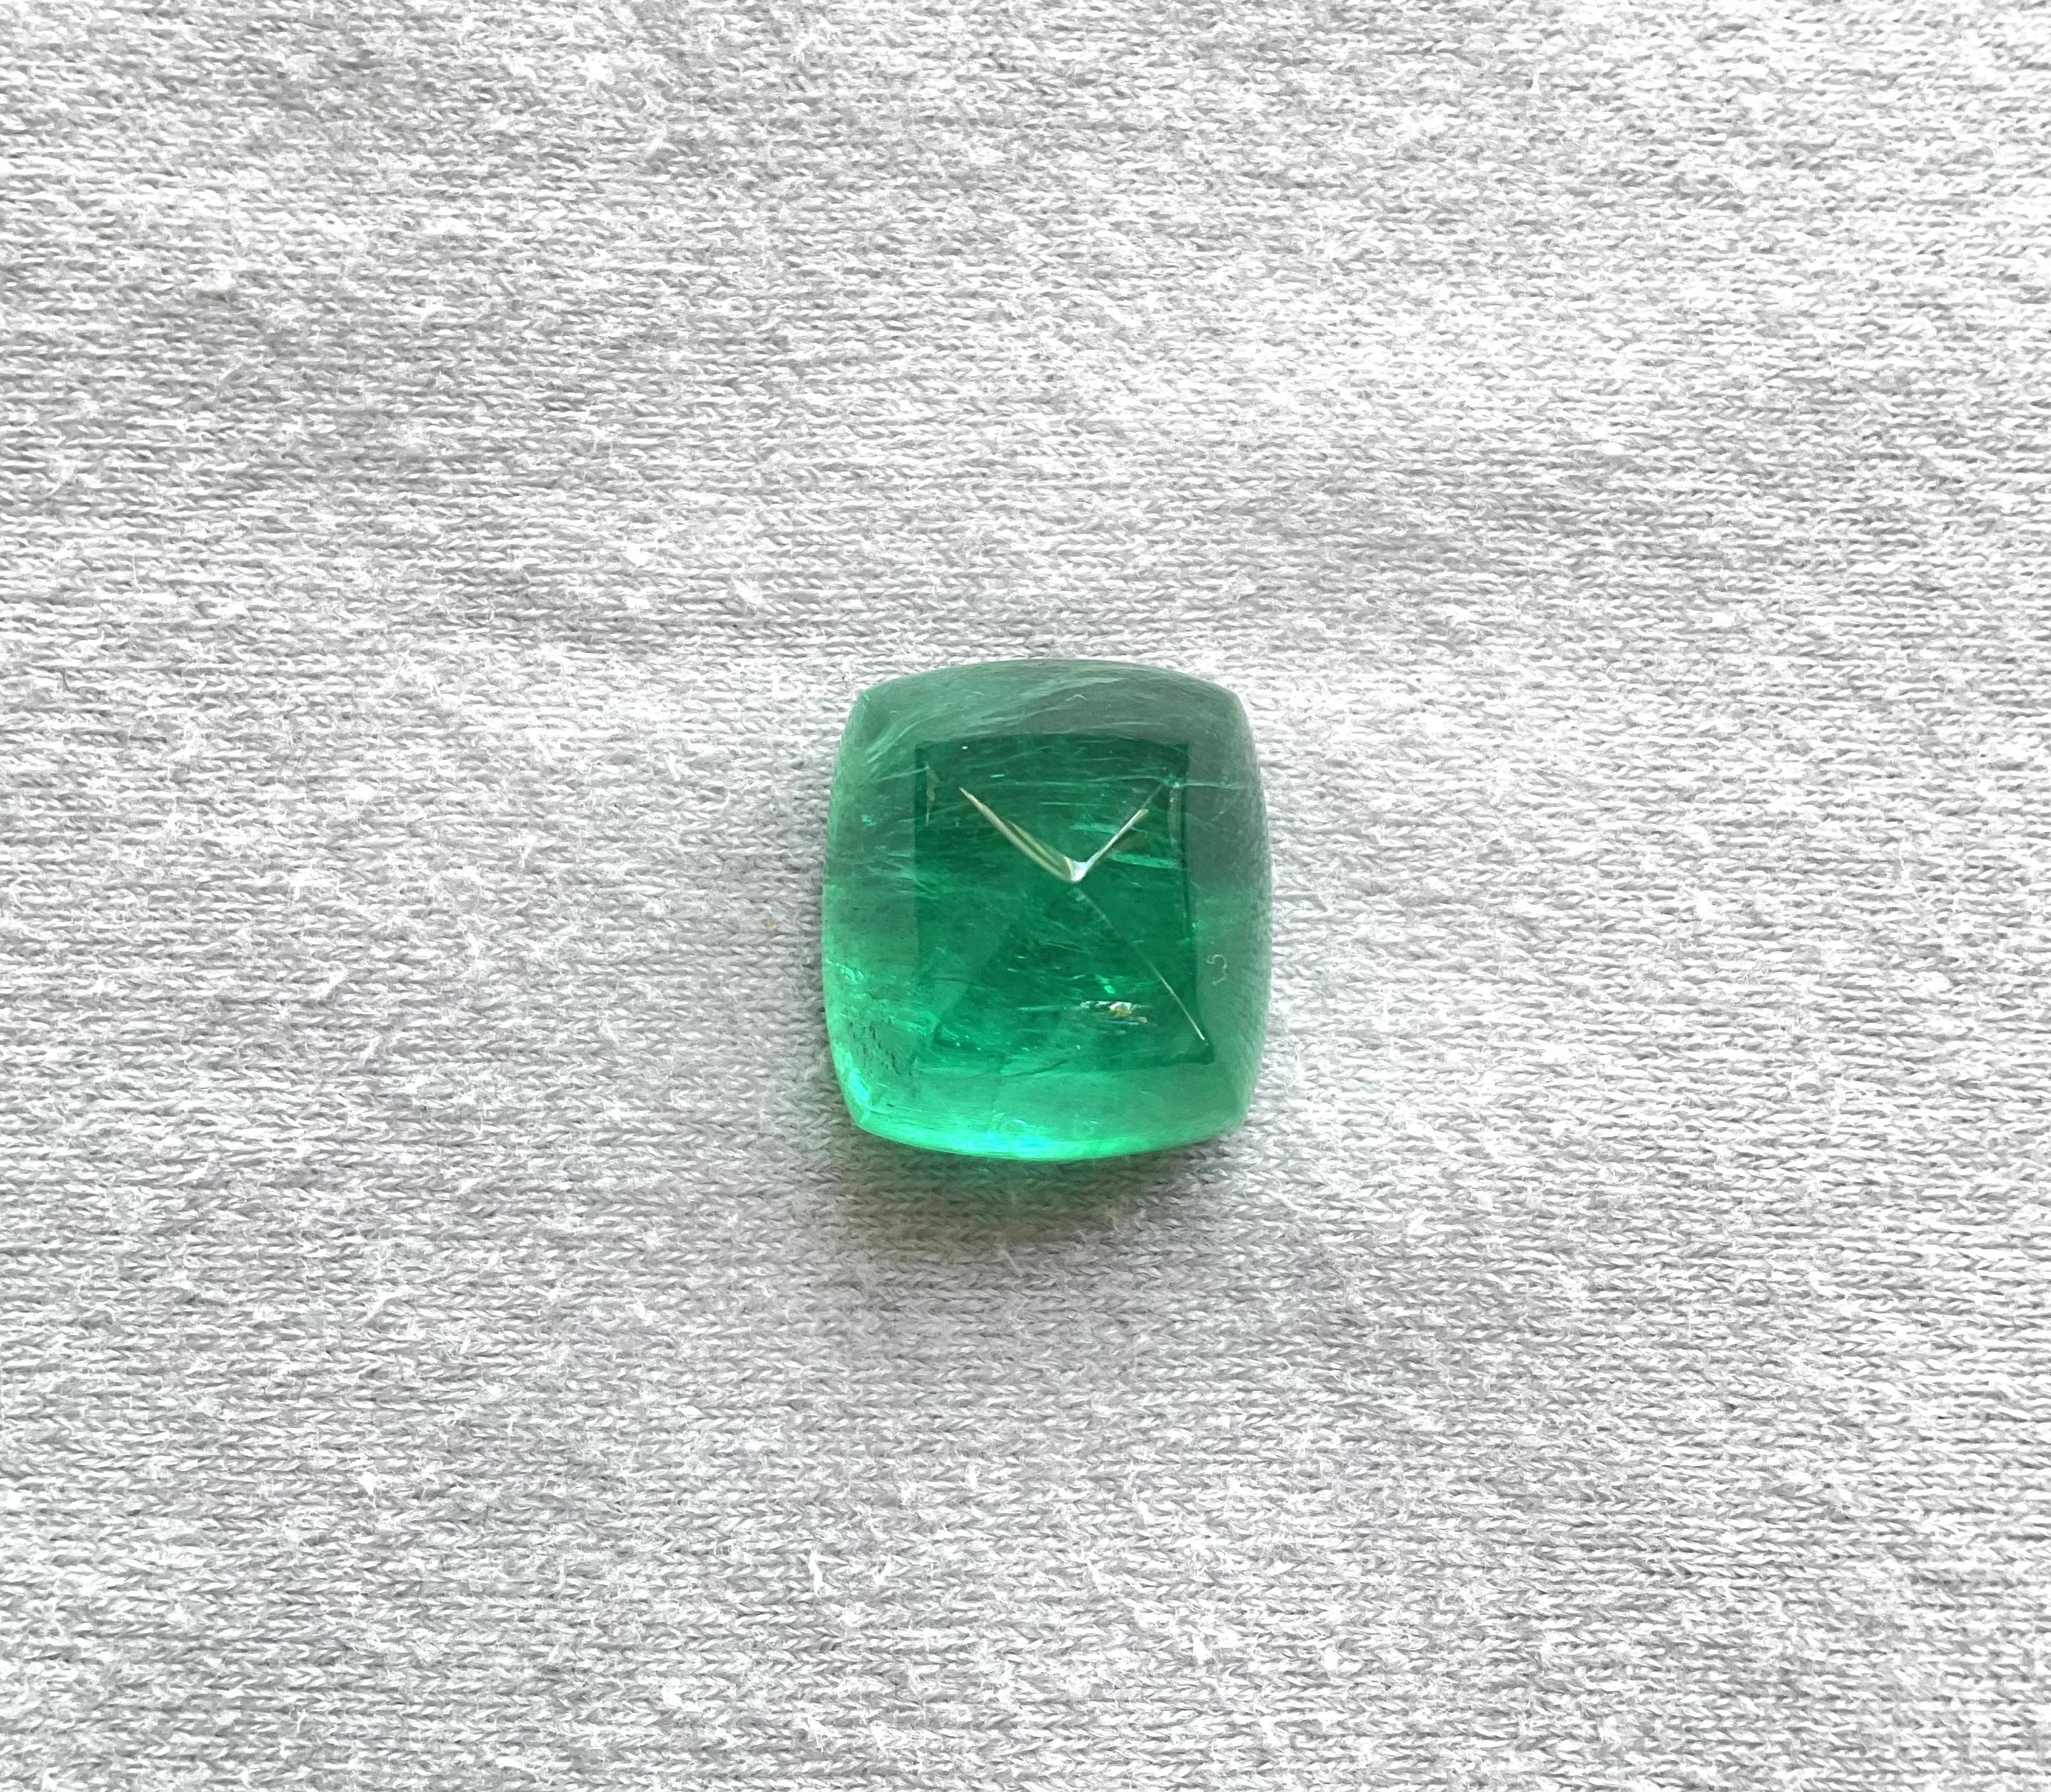 25.38 Carats Zambian Emerald Sugarloaf Cabochon Top Quality Natural Gemstone
Minor OIL
Gemstone - Emerald
Weight: 25.38 Carats
Size: 17x15x13 MM
Quantity: 1
Shape: Sugarloaf